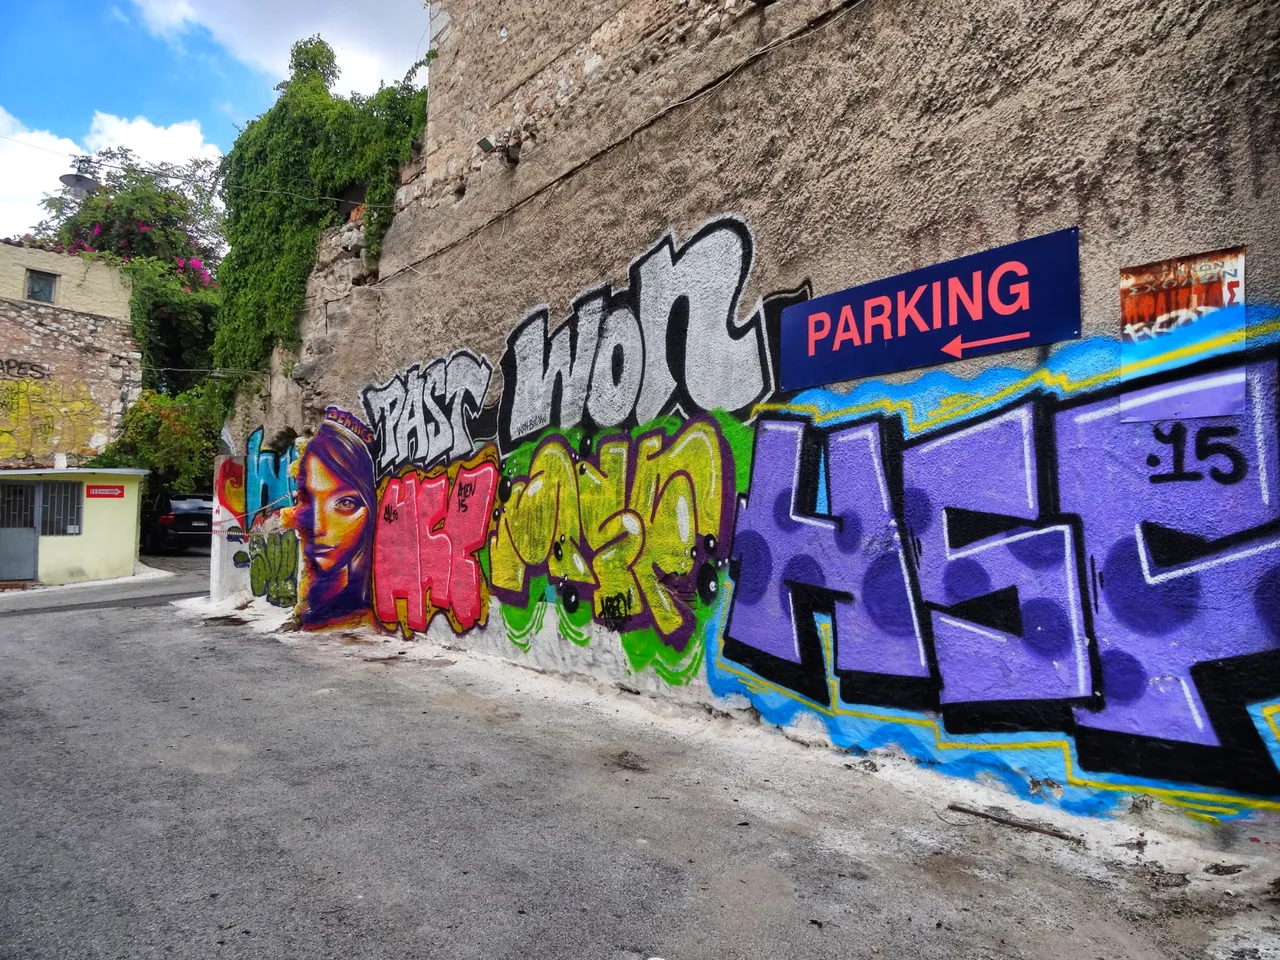 The ”Parking”-sign isn’t urban art